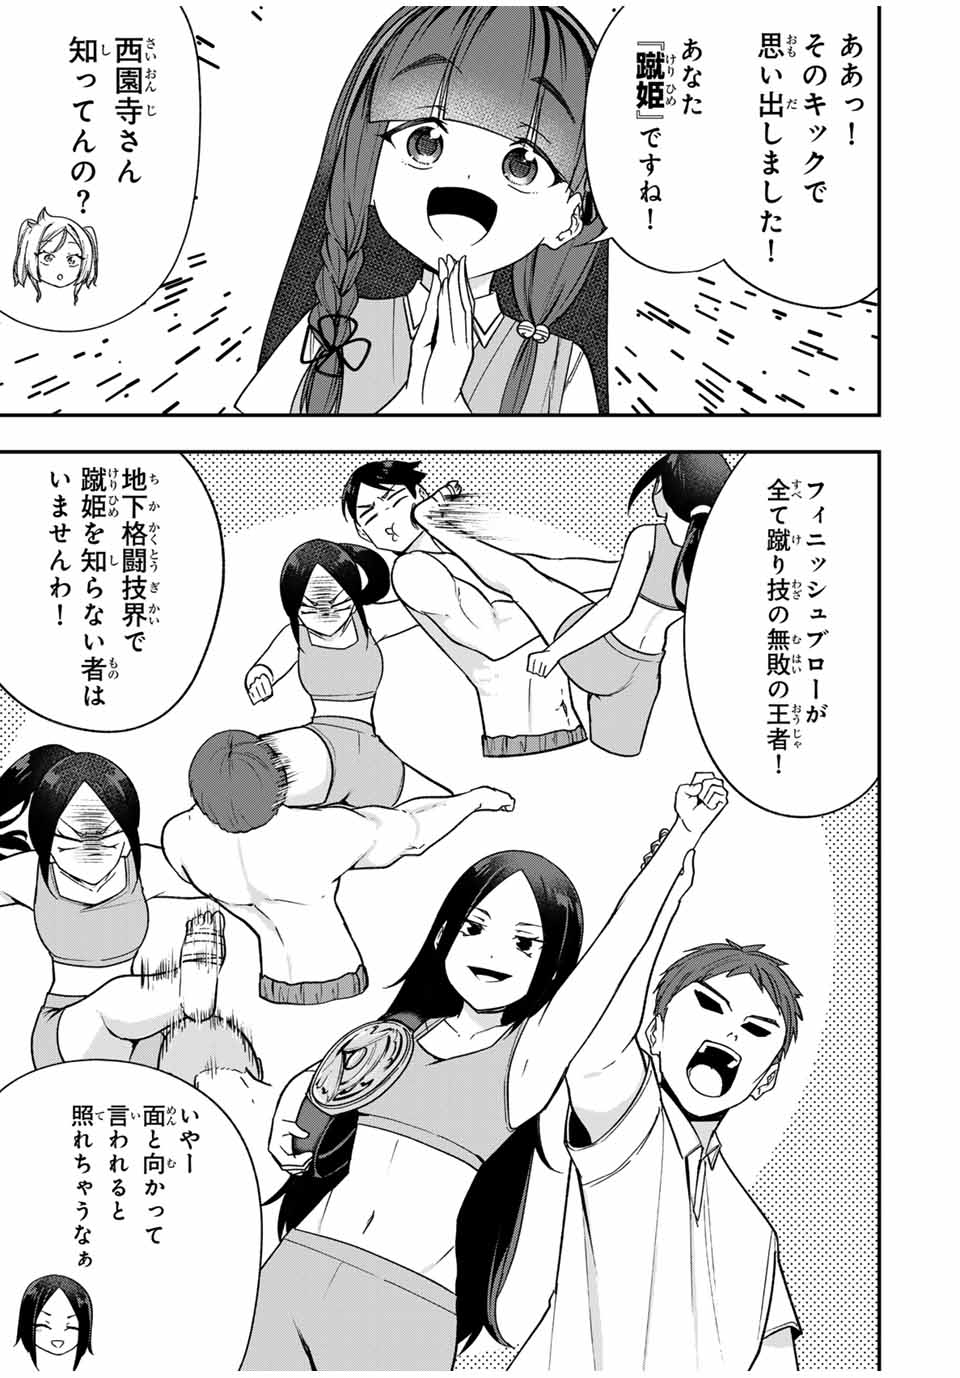 Heroine wa xx Okasegitai - Chapter 12 - Page 5